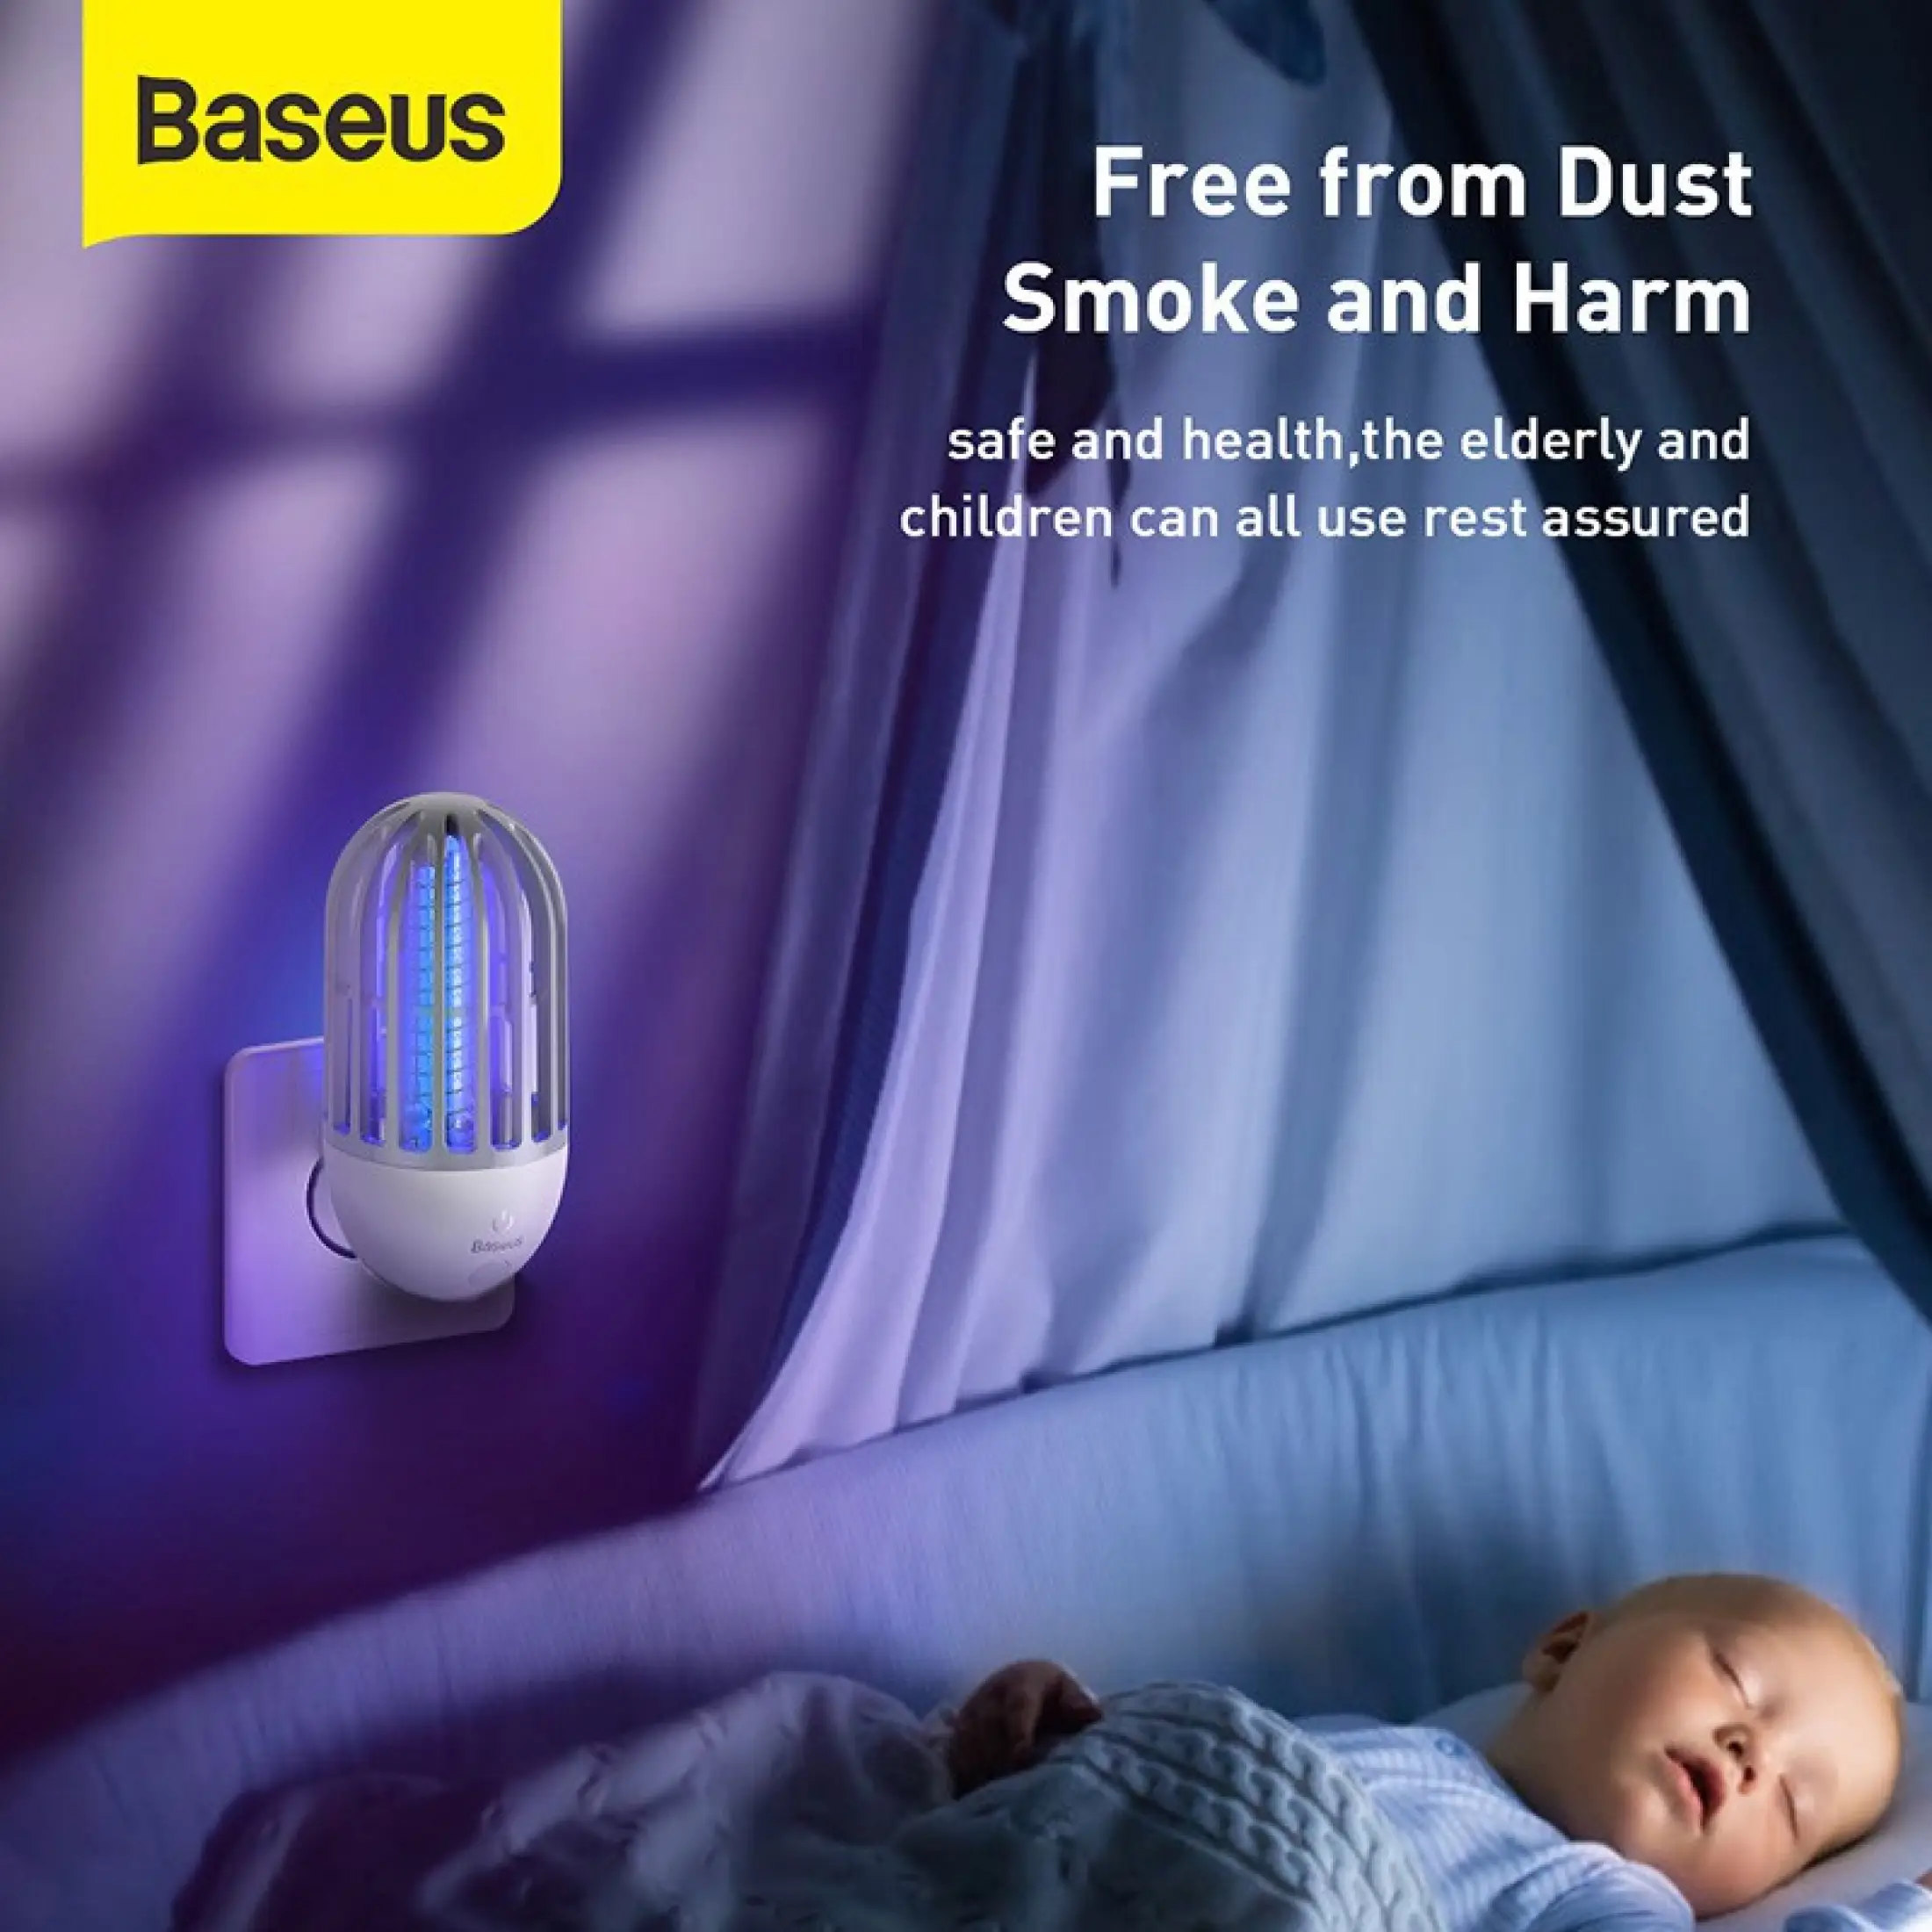 Baseus Linlon Outlet Mosquito Lamp EU Plug buy online best price in pakistan